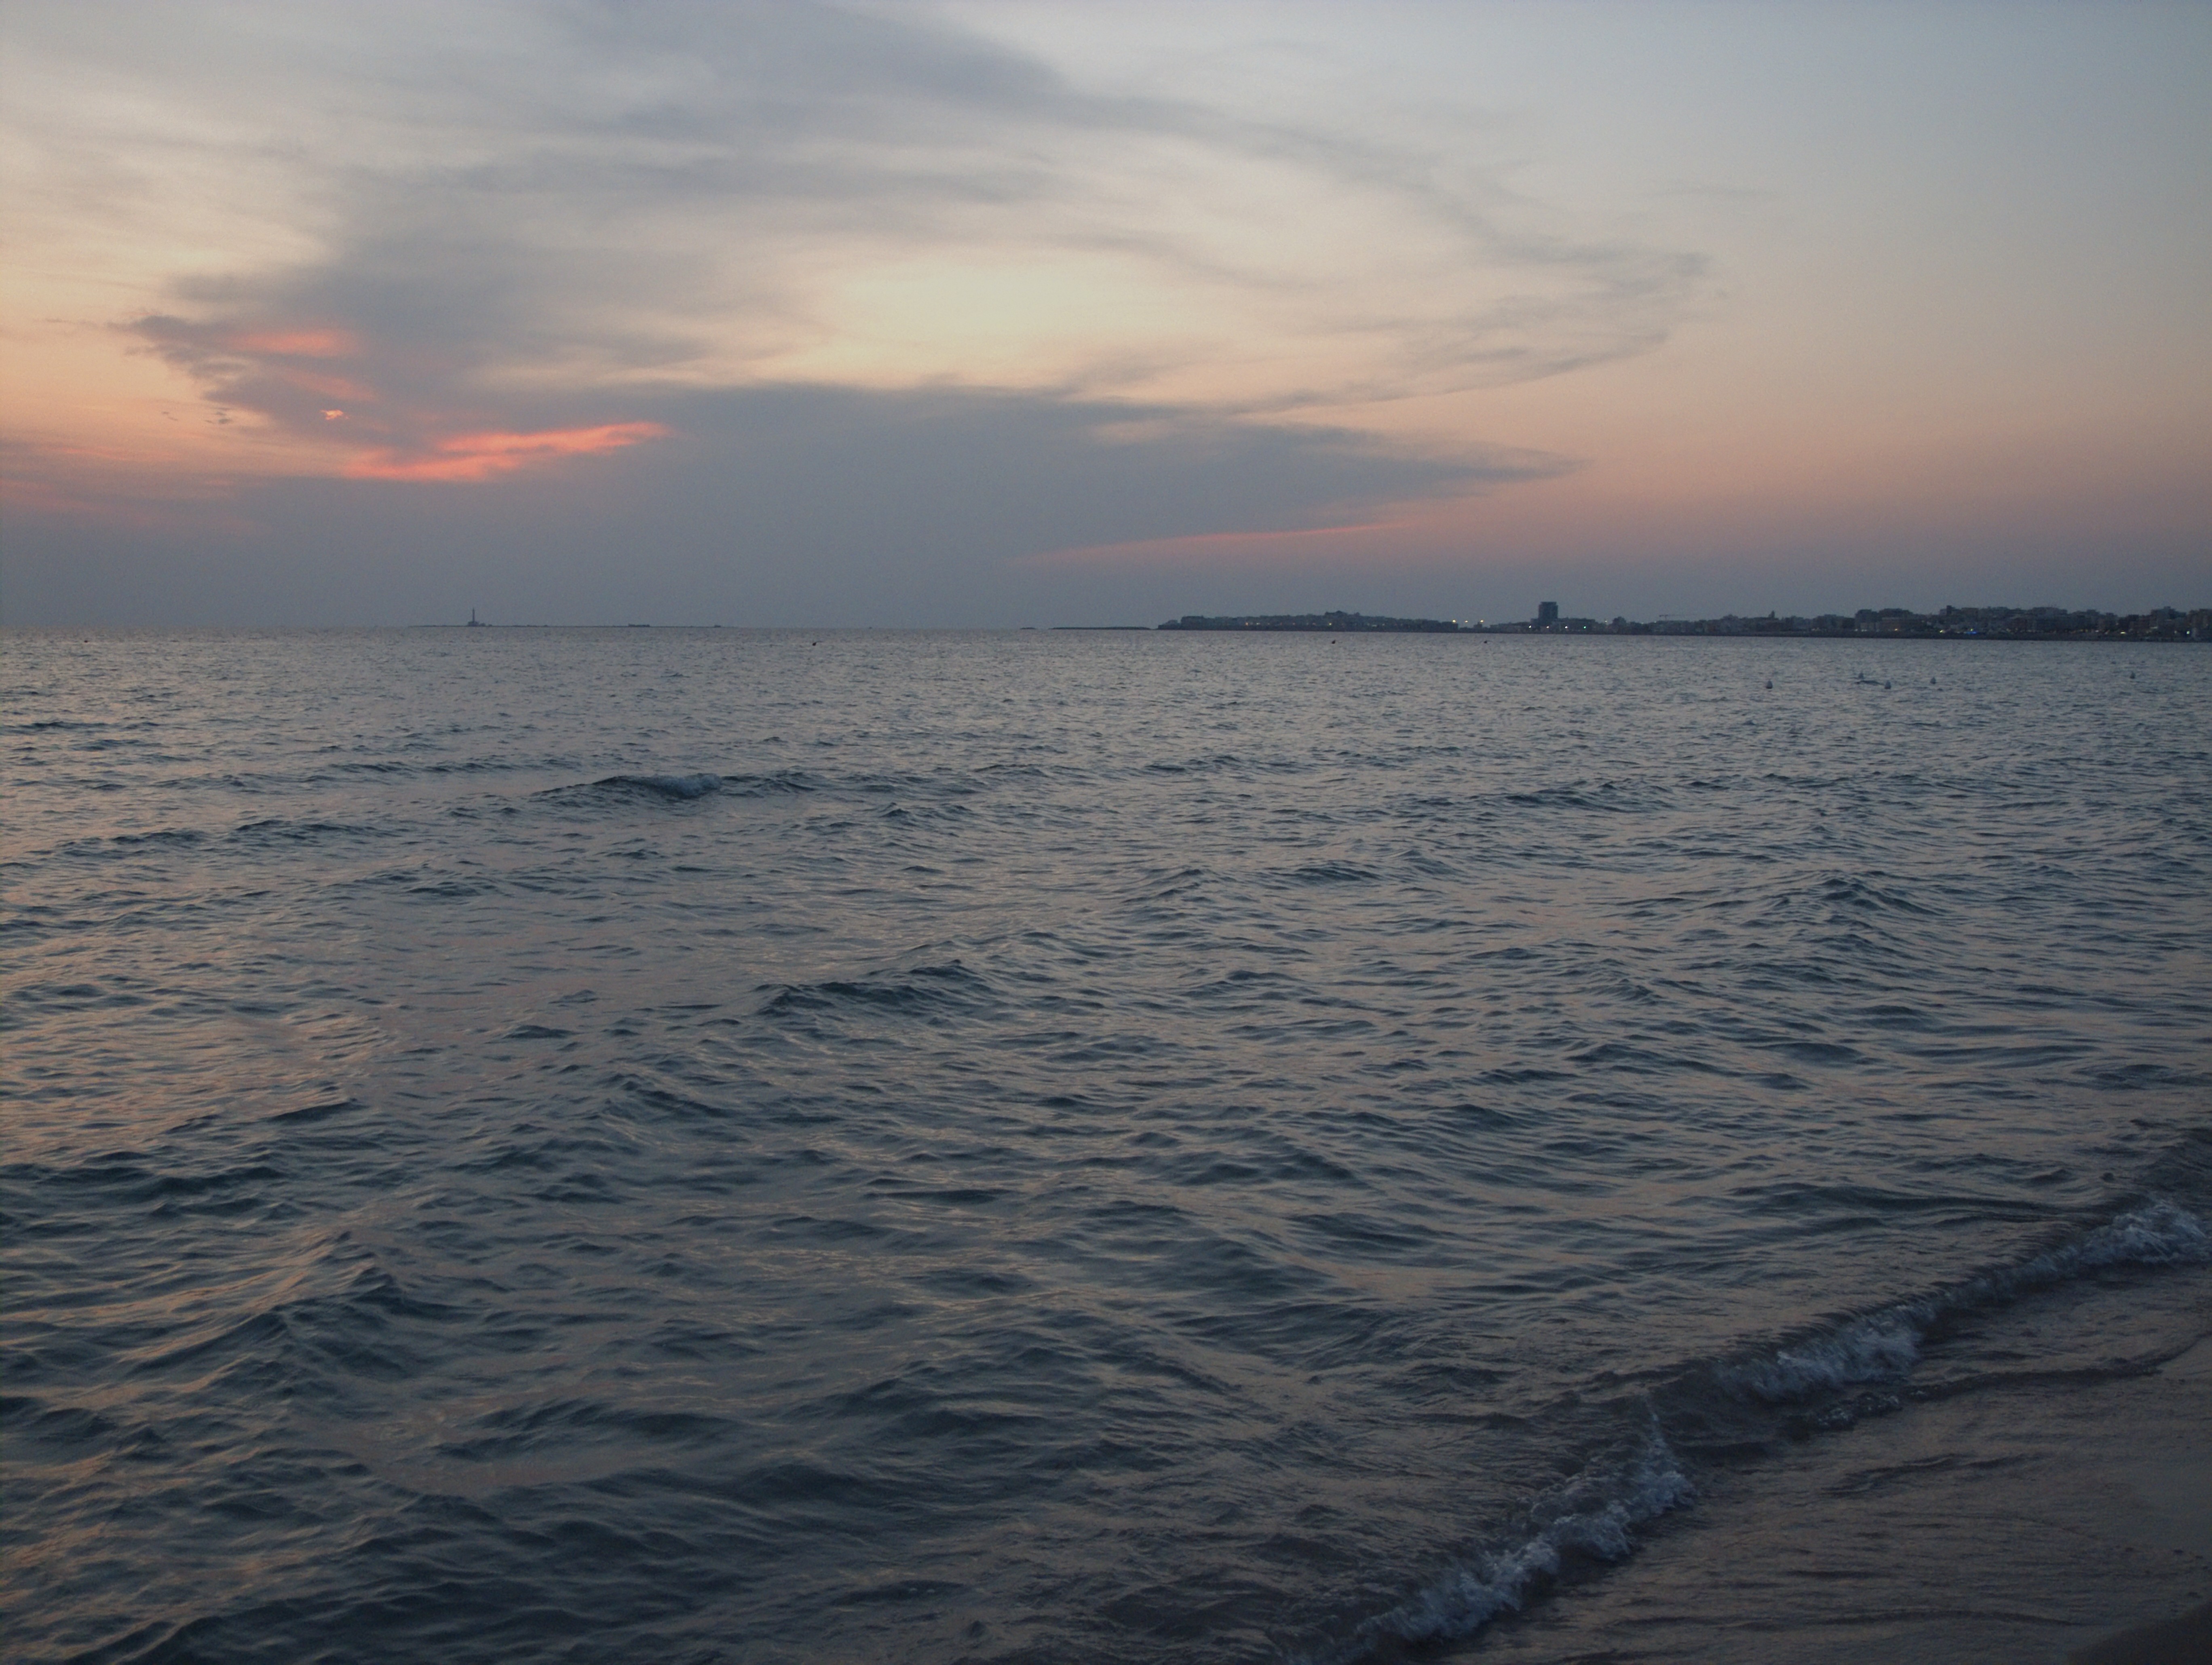 Baia Verde fraction of Gallipoli (Lecce, Italy): Sunset on the sea of Gallipoli - Baia Verde fraction of Gallipoli (Lecce, Italy)